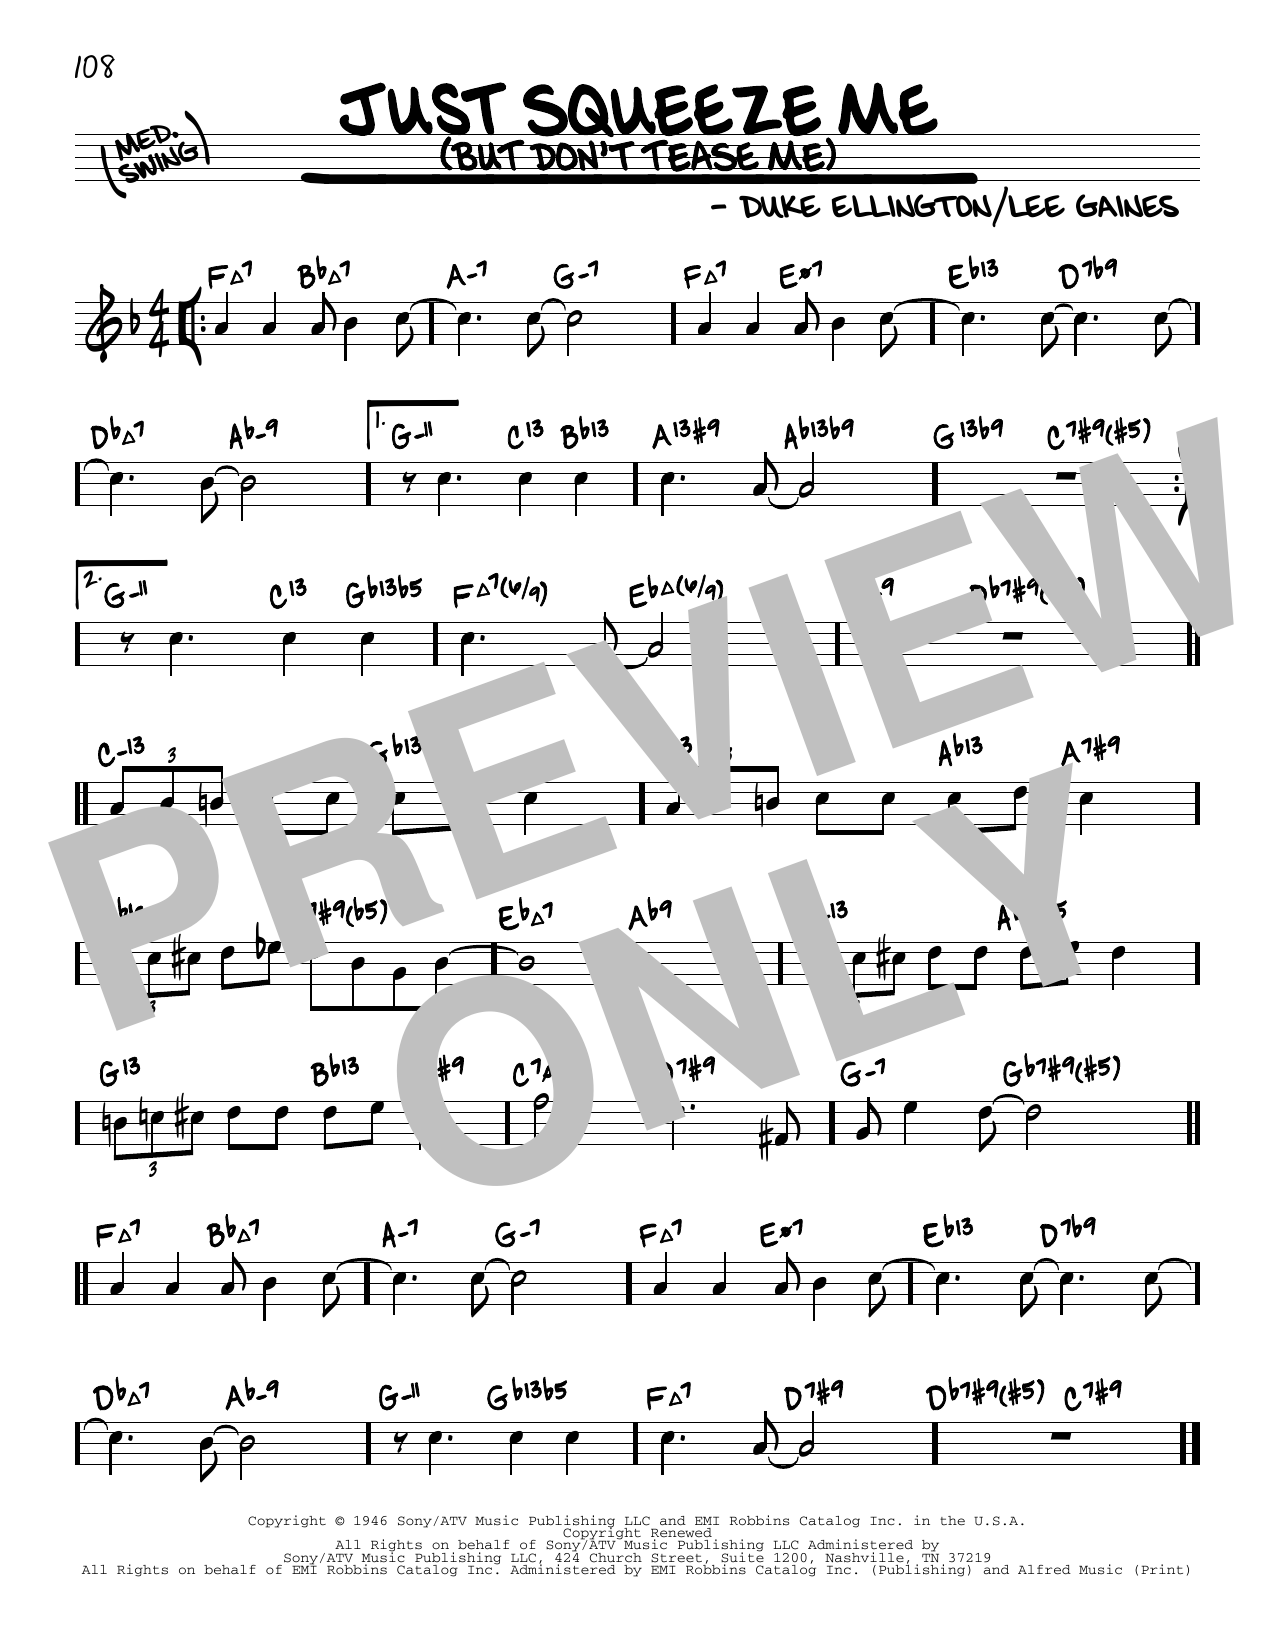 Duke Ellington Just Squeeze Me (But Don't Tease Me) (arr. David Hazeltine) Sheet Music Notes & Chords for Real Book – Enhanced Chords - Download or Print PDF